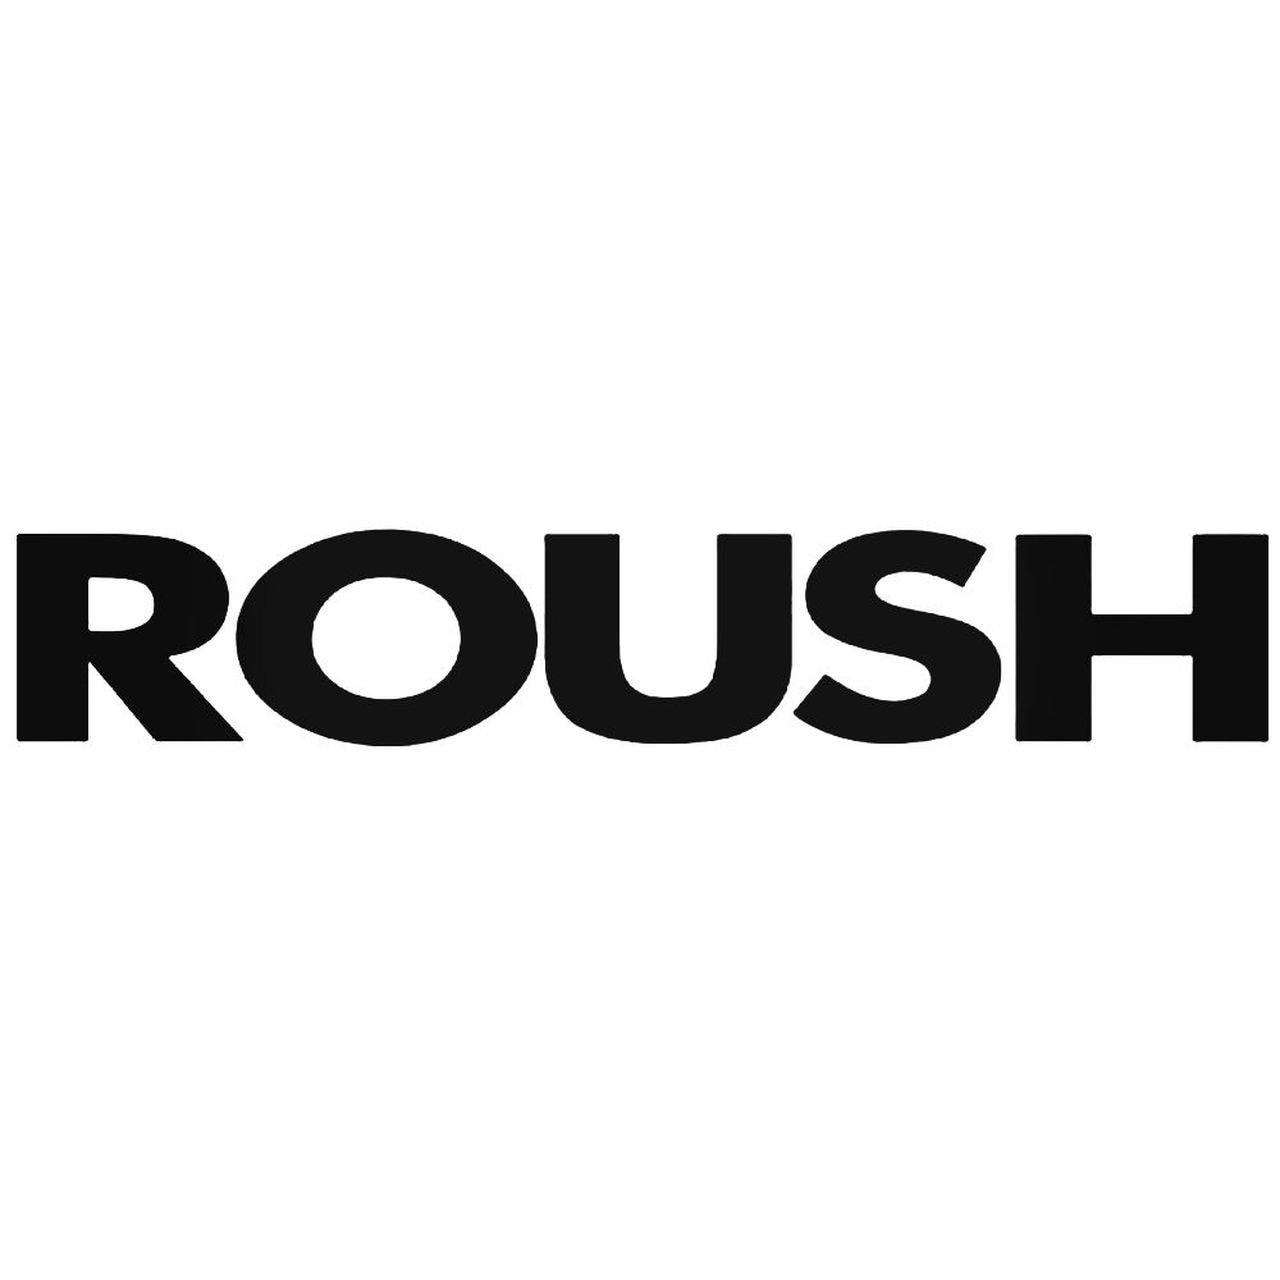 Roush Logo - Roush Decal Sticker